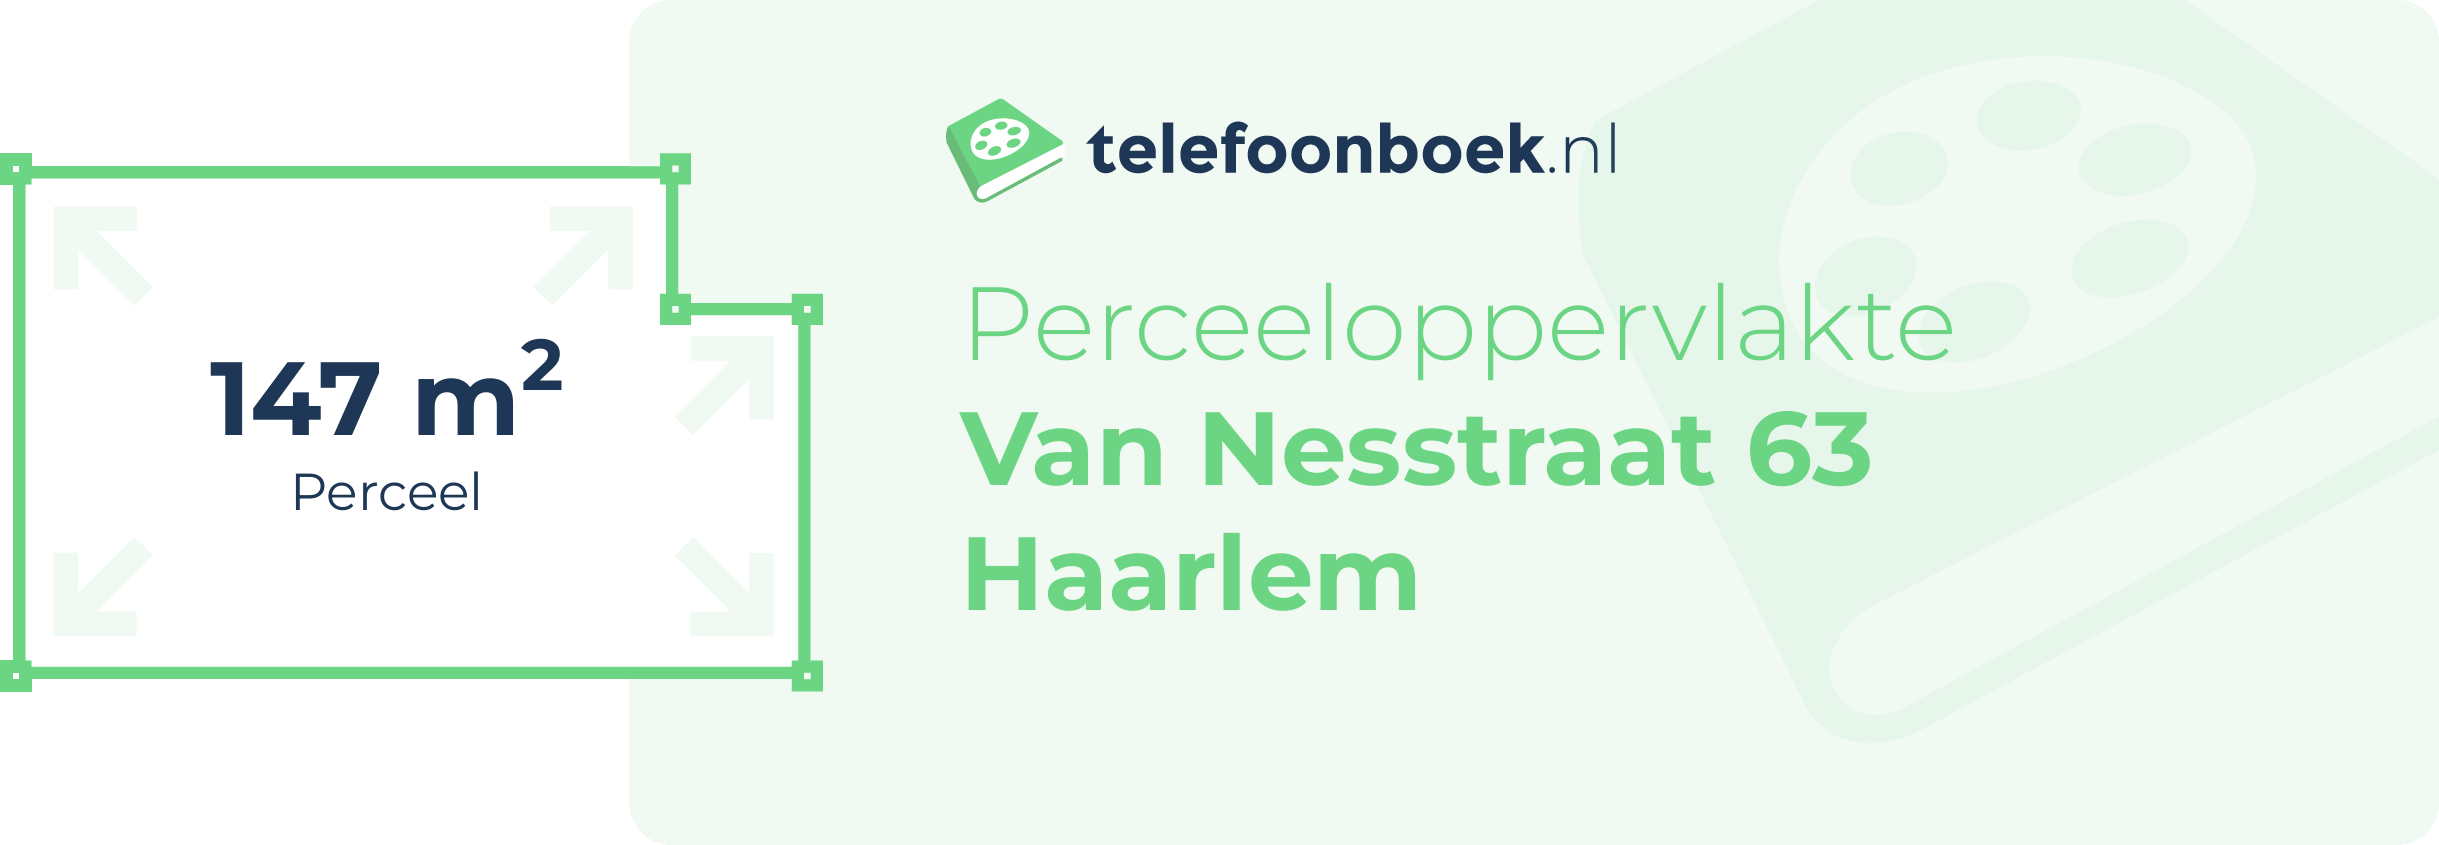 Perceeloppervlakte Van Nesstraat 63 Haarlem